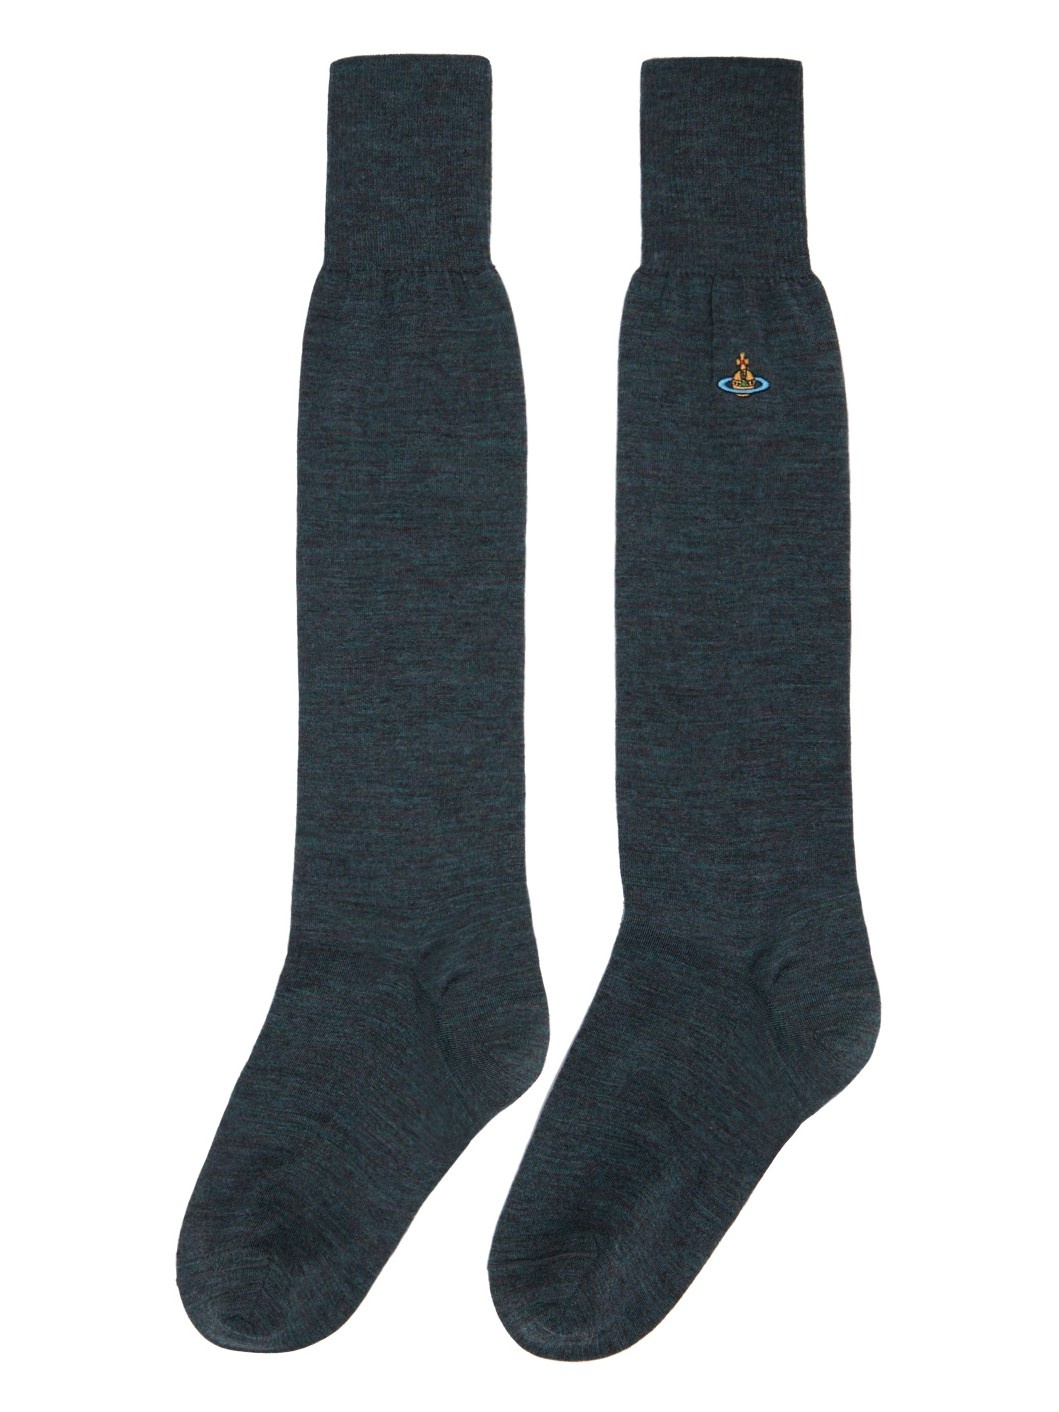 Blue & Gray Uni Colour High Socks - 2